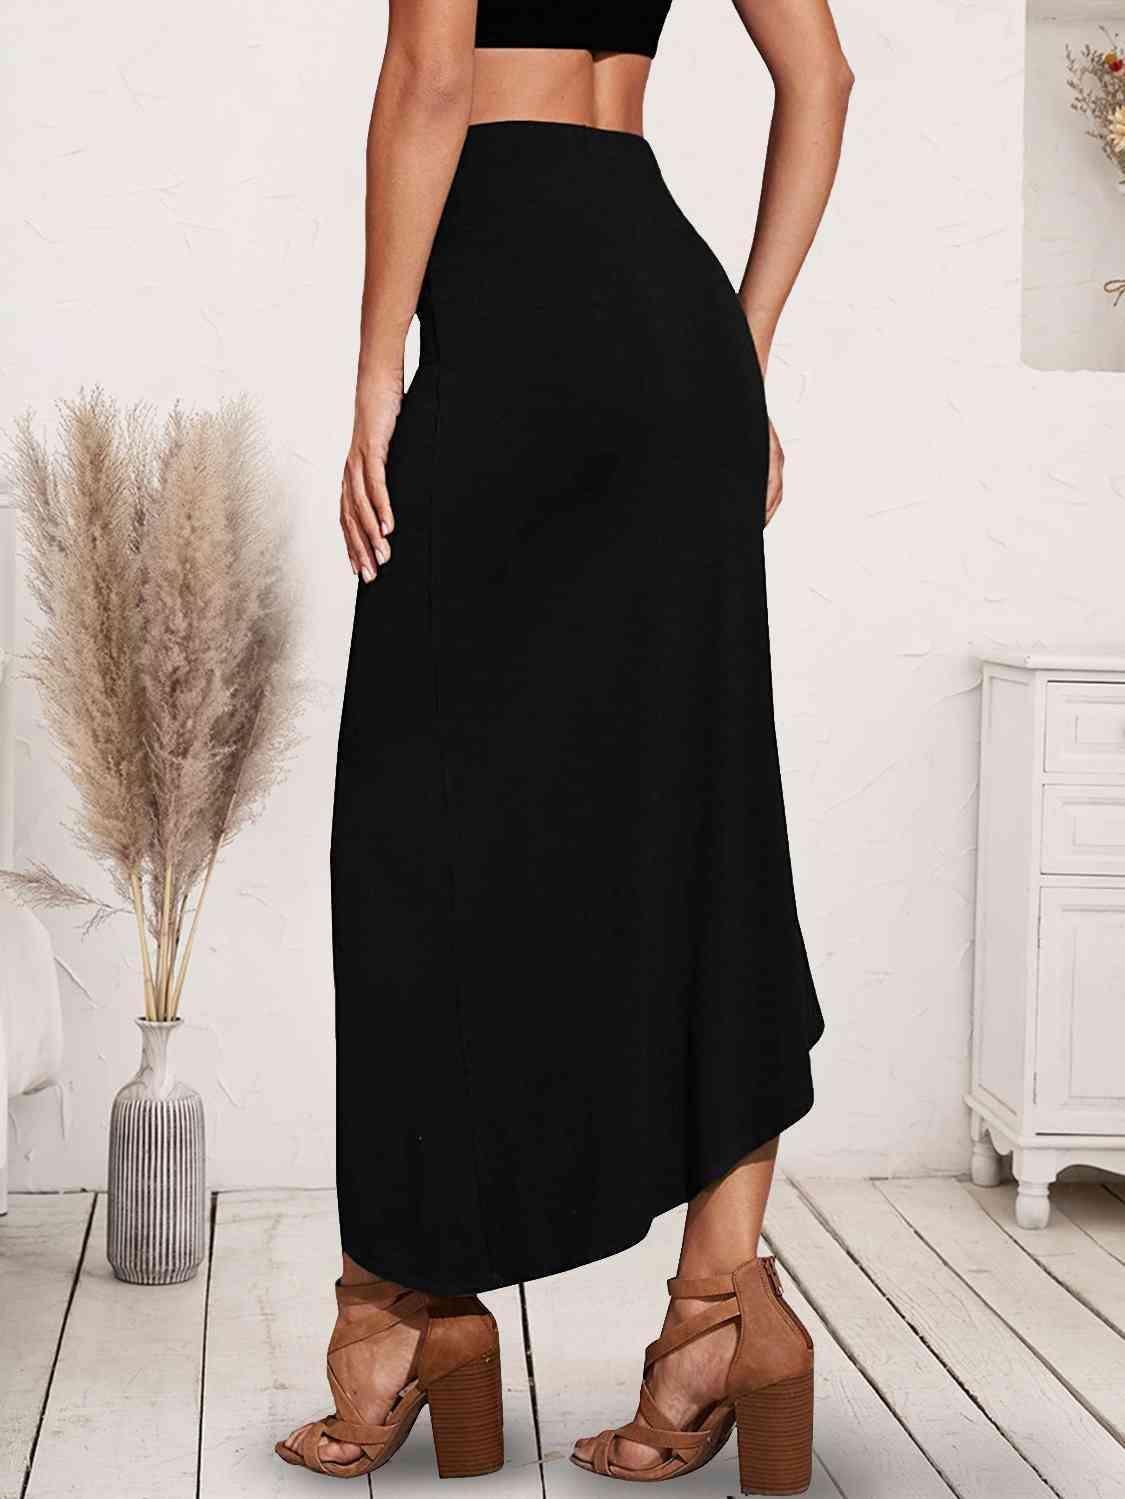 Irresistible Twist Detail Black Midi Skirt Slit - MXSTUDIO.COM